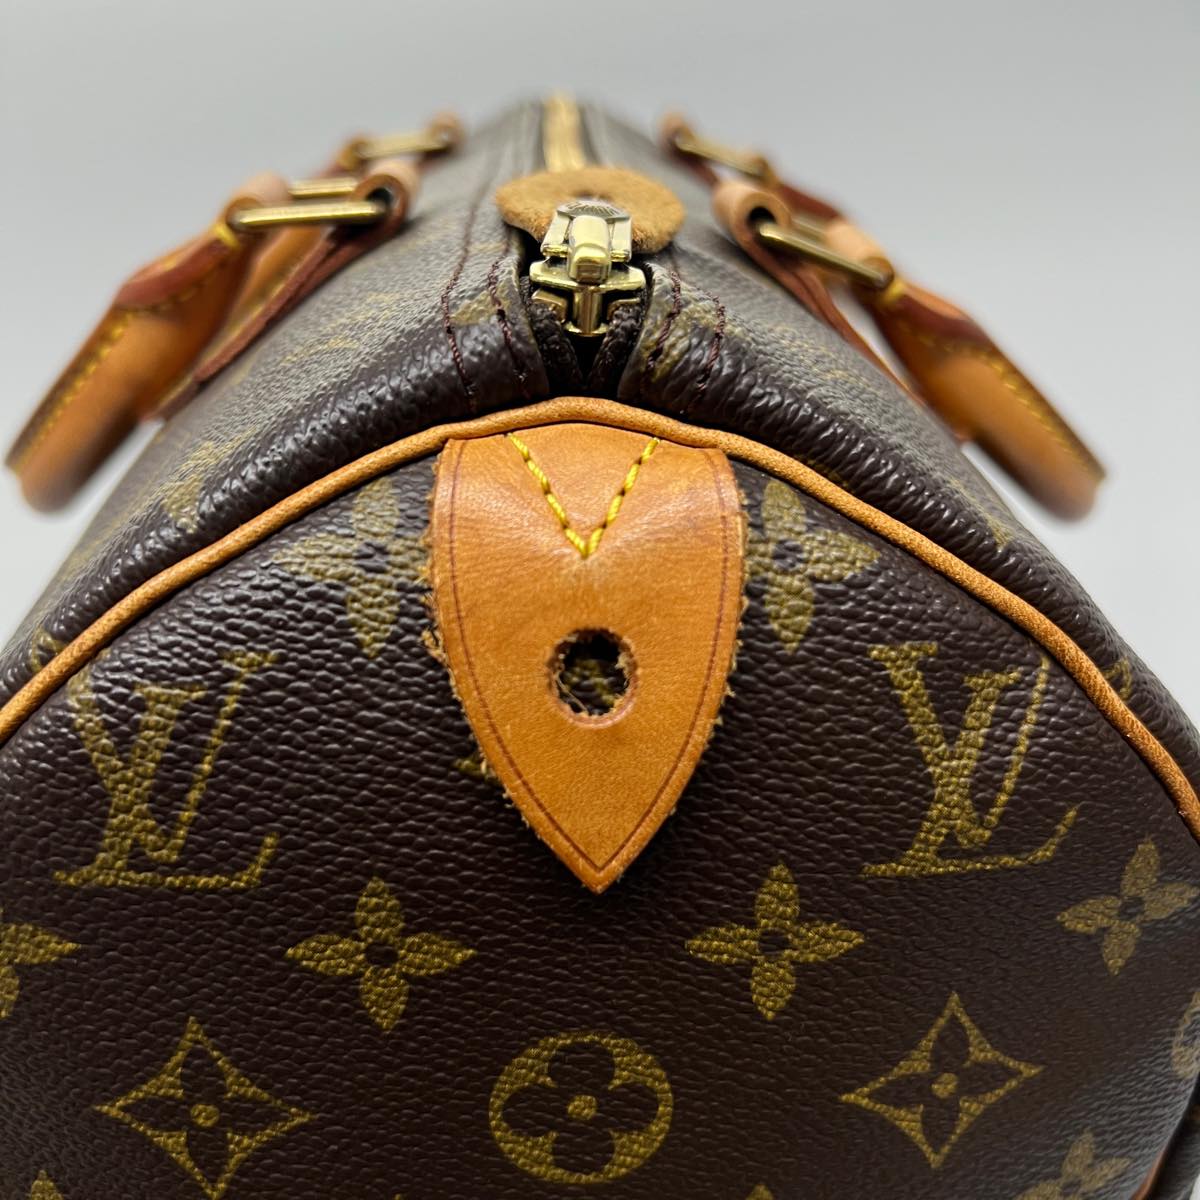 Authentic Louis Vuitton Monogram Speedy 30 Hand Bag Purse SP0955